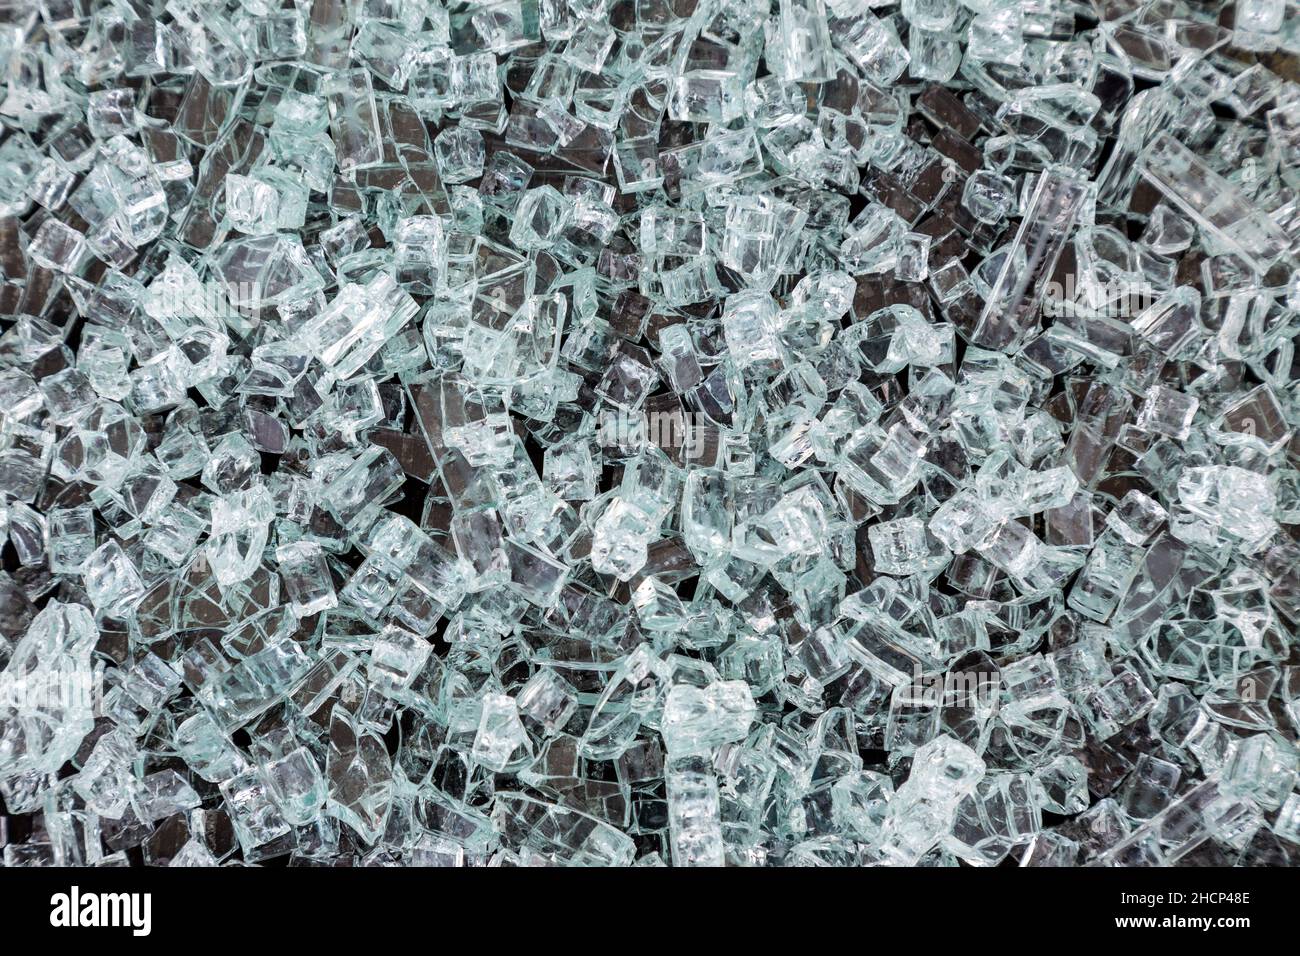 Broken glass pieces Stock Photo by ©pavsie 37642363